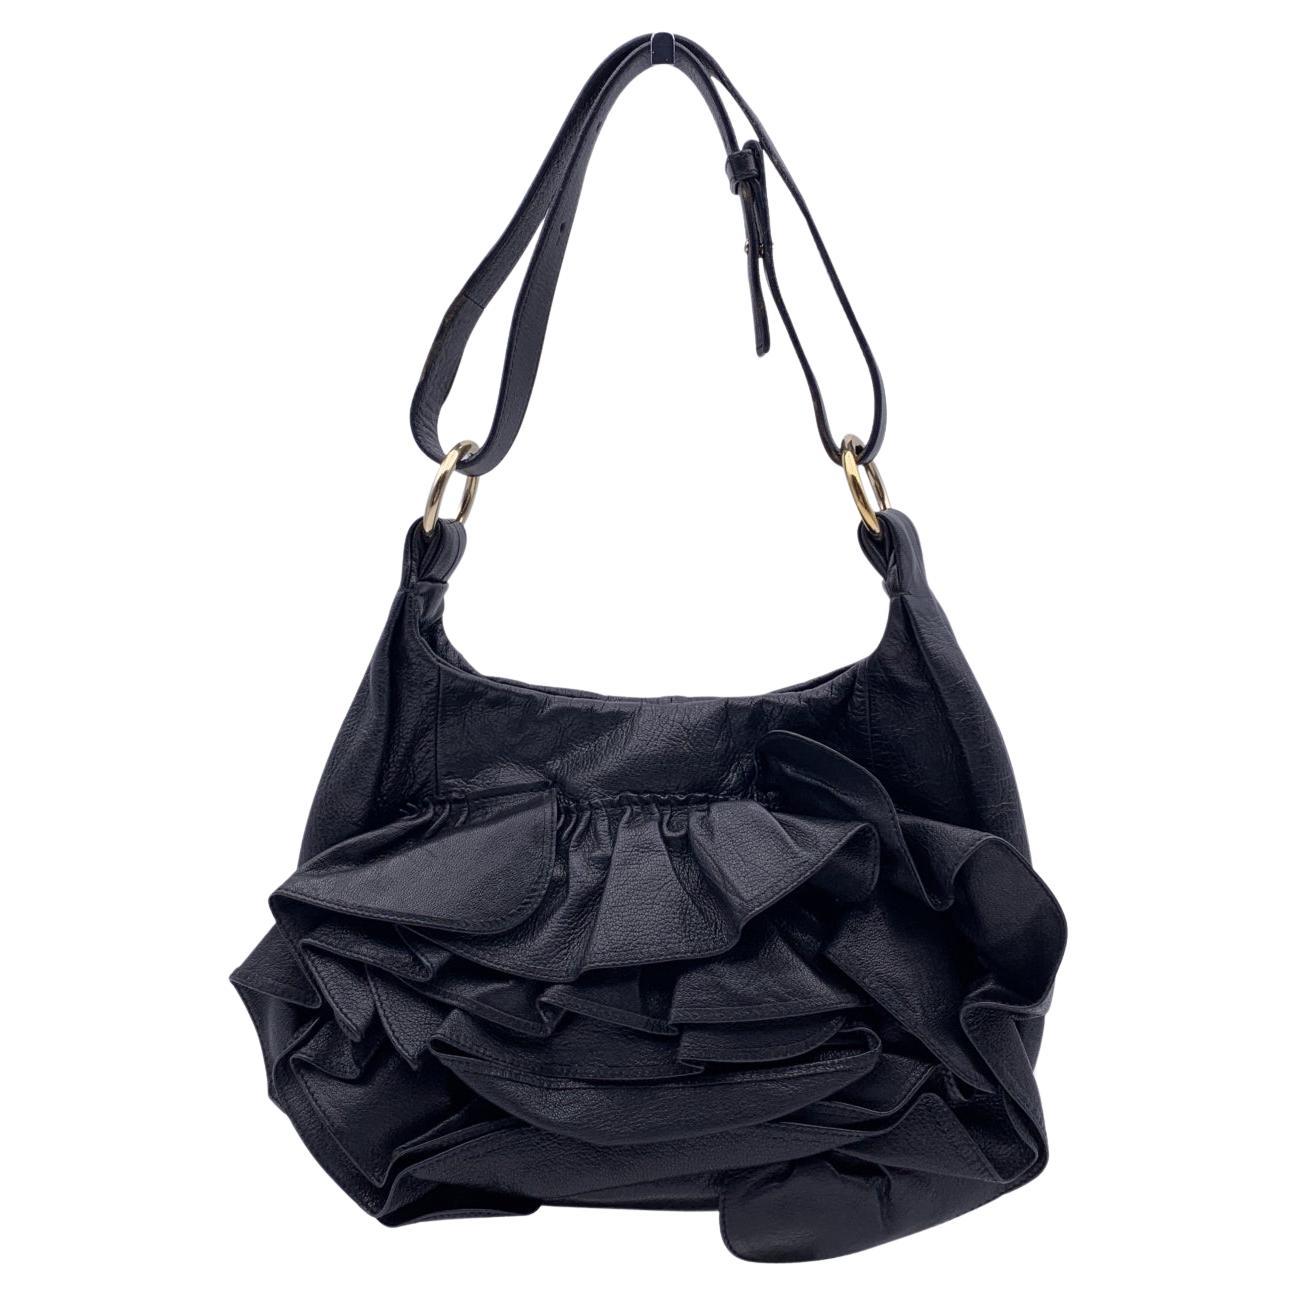 Yves Saint Laurent Black Ruffled Leather Hobo Tote Shoulder Bag For Sale